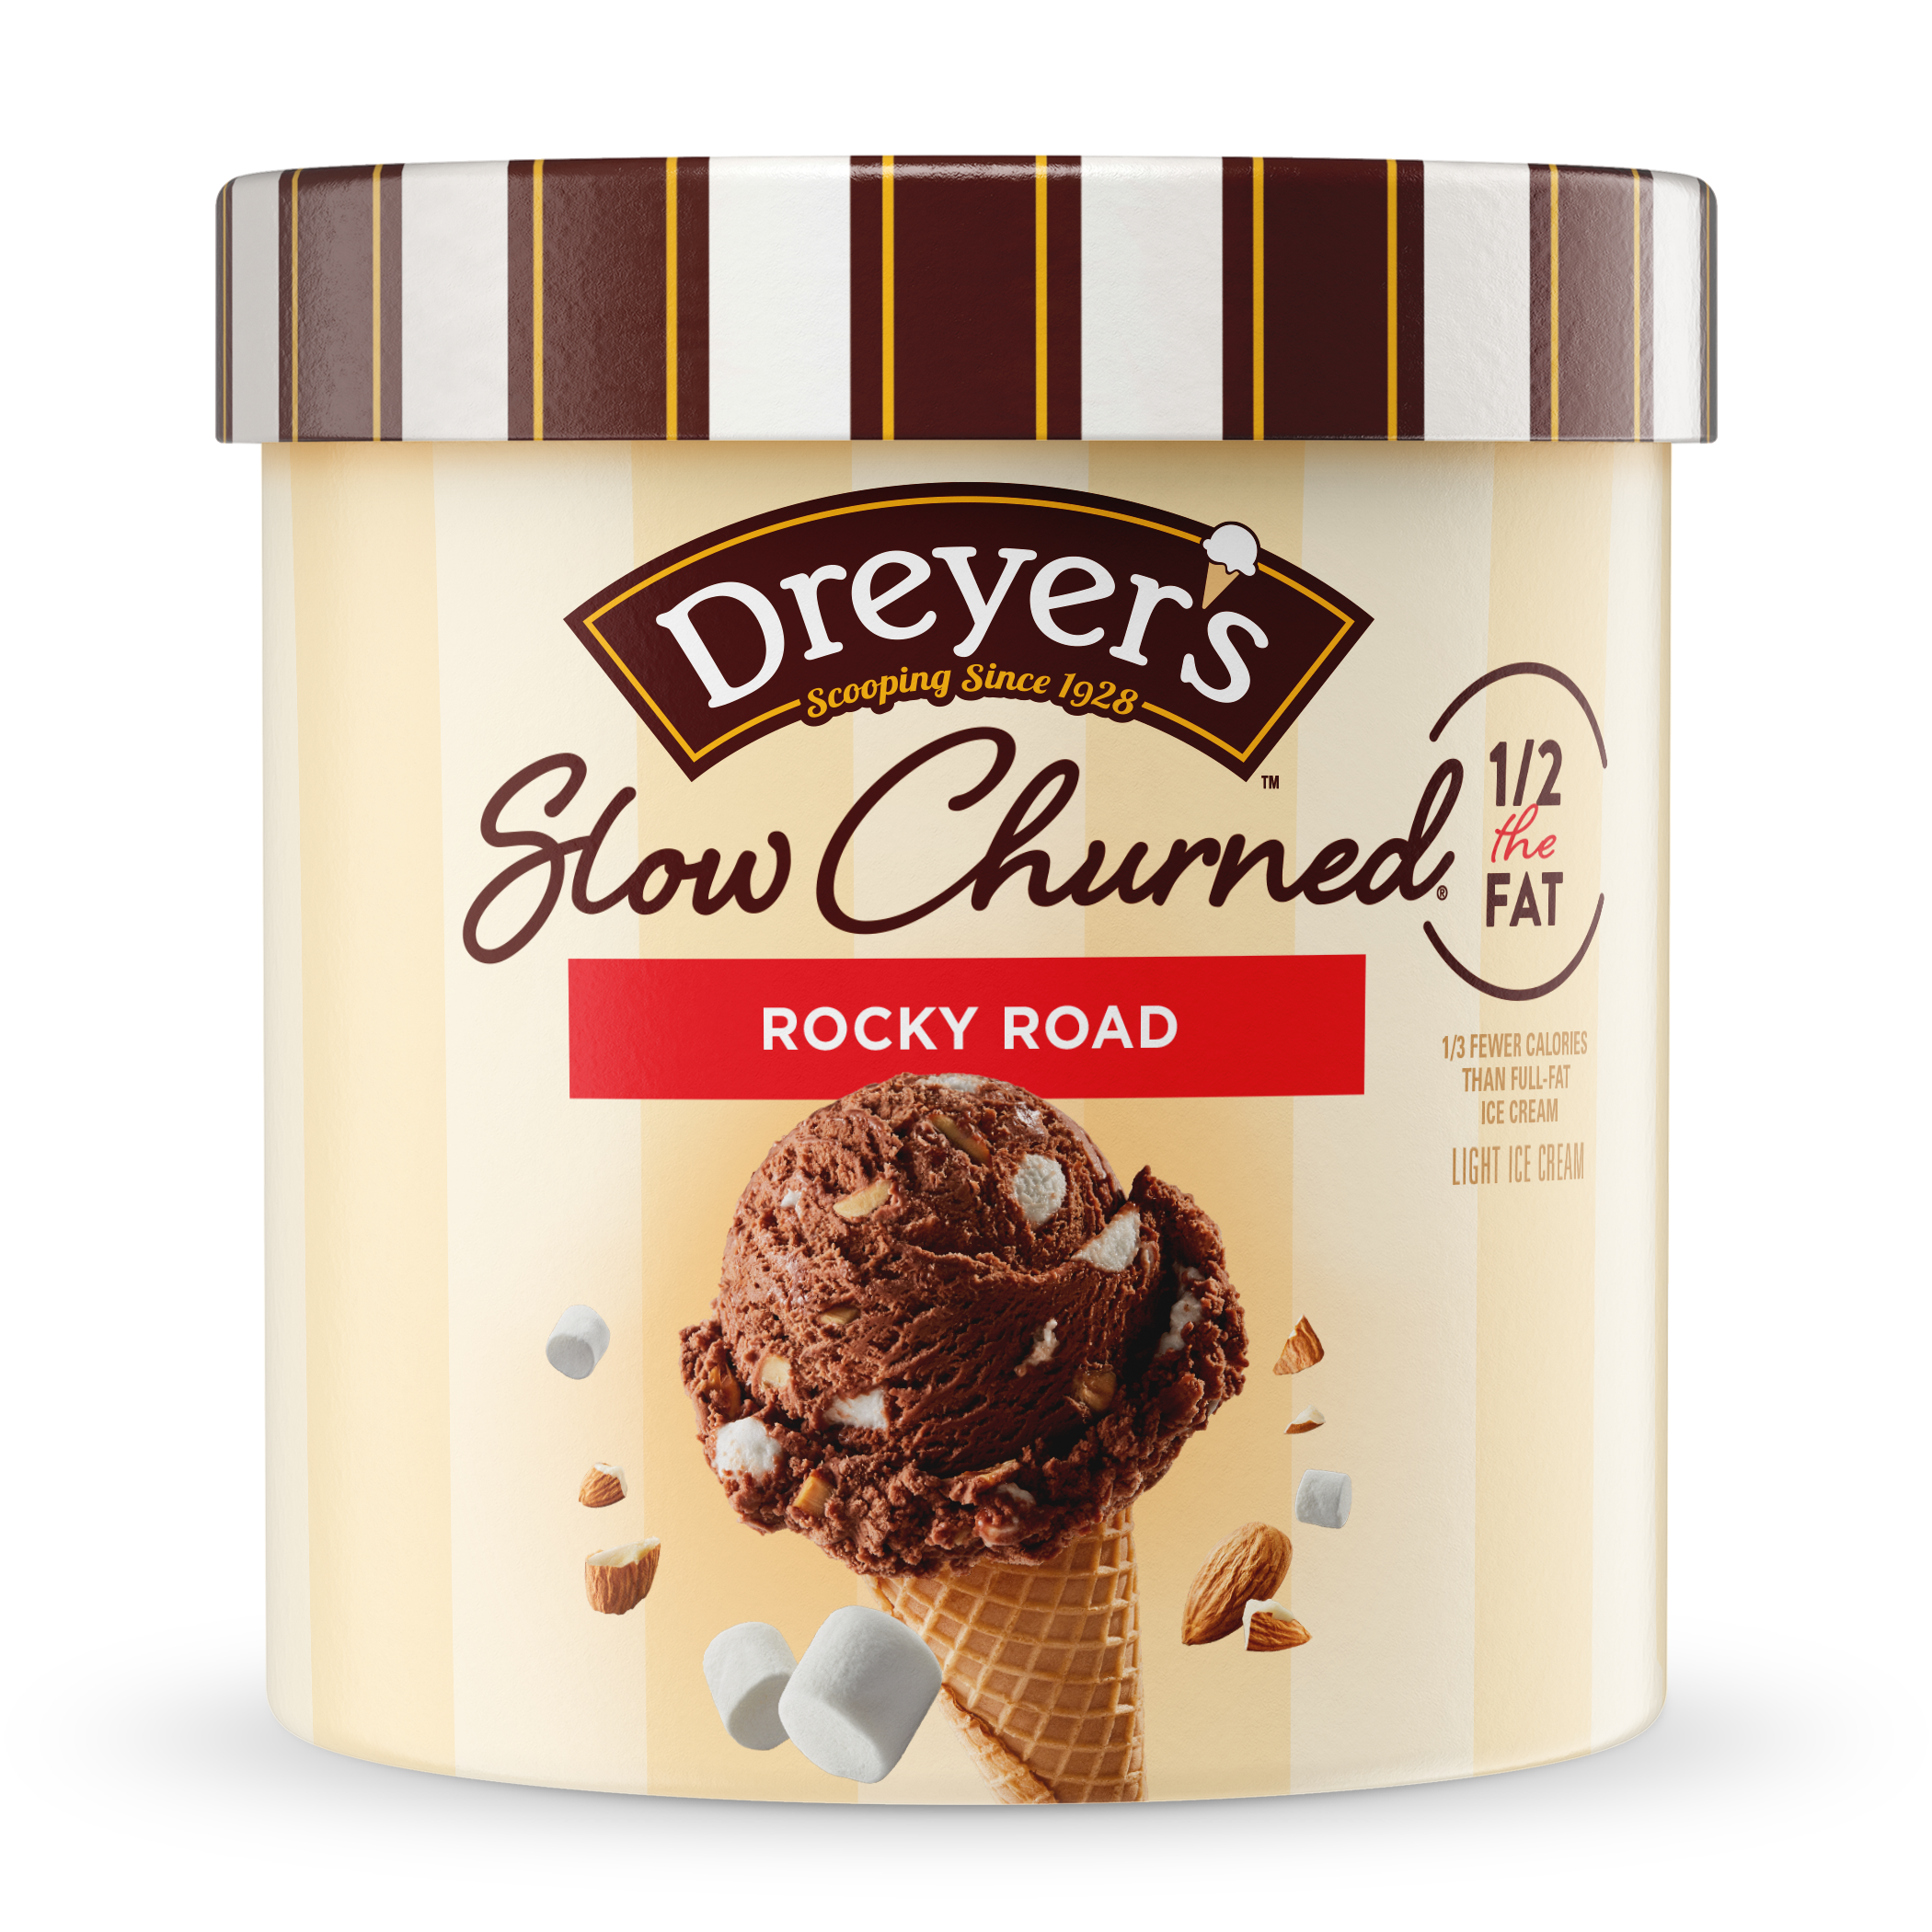 Carton of Dreyer's slow-churned rocky road ice cream